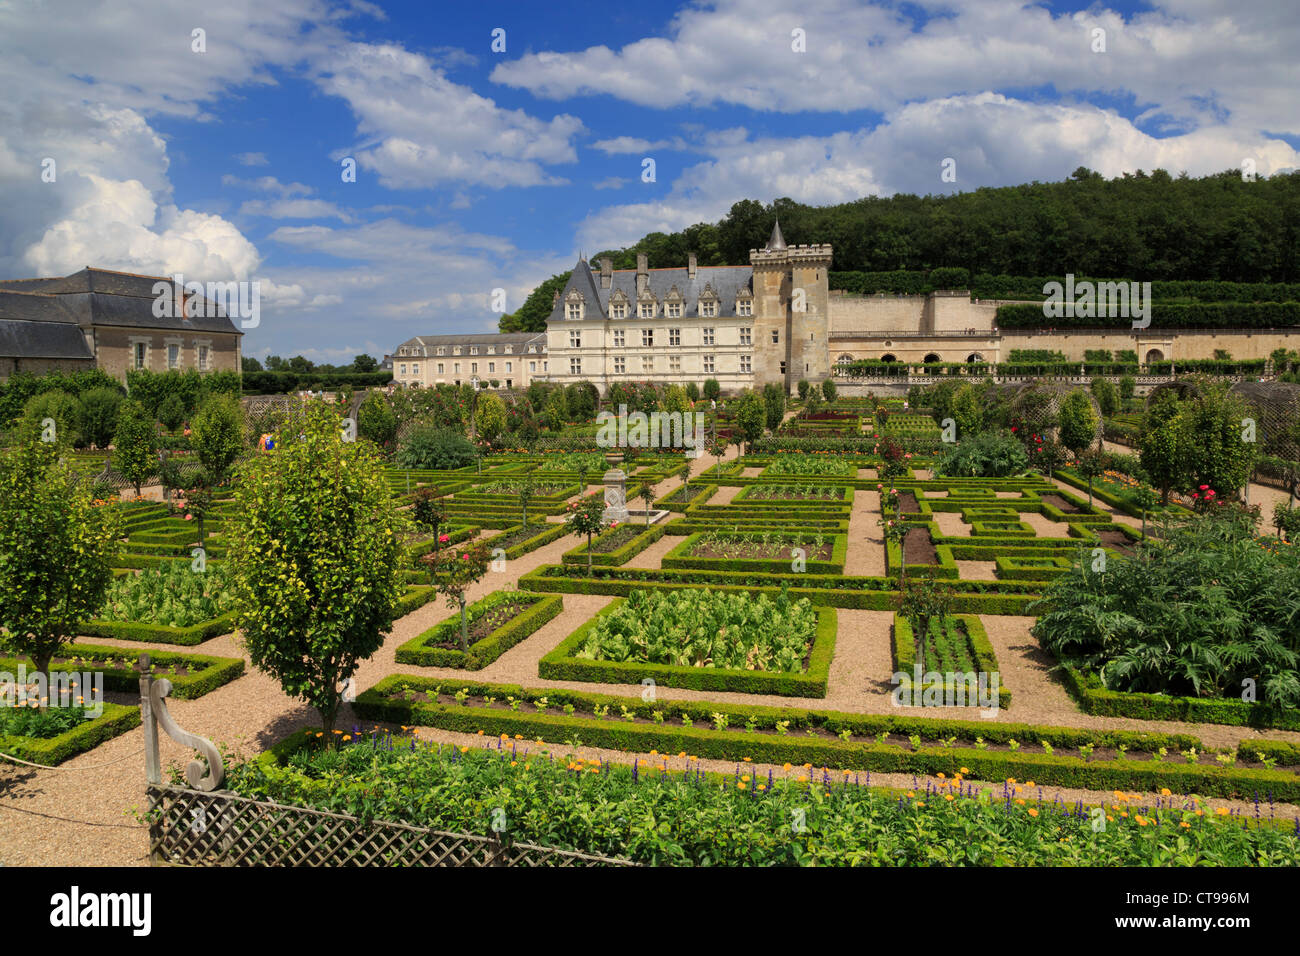 Chateau de Villandry, Loire Valley, France. Late renaissance chateau famous for its restored gardens. Stock Photo